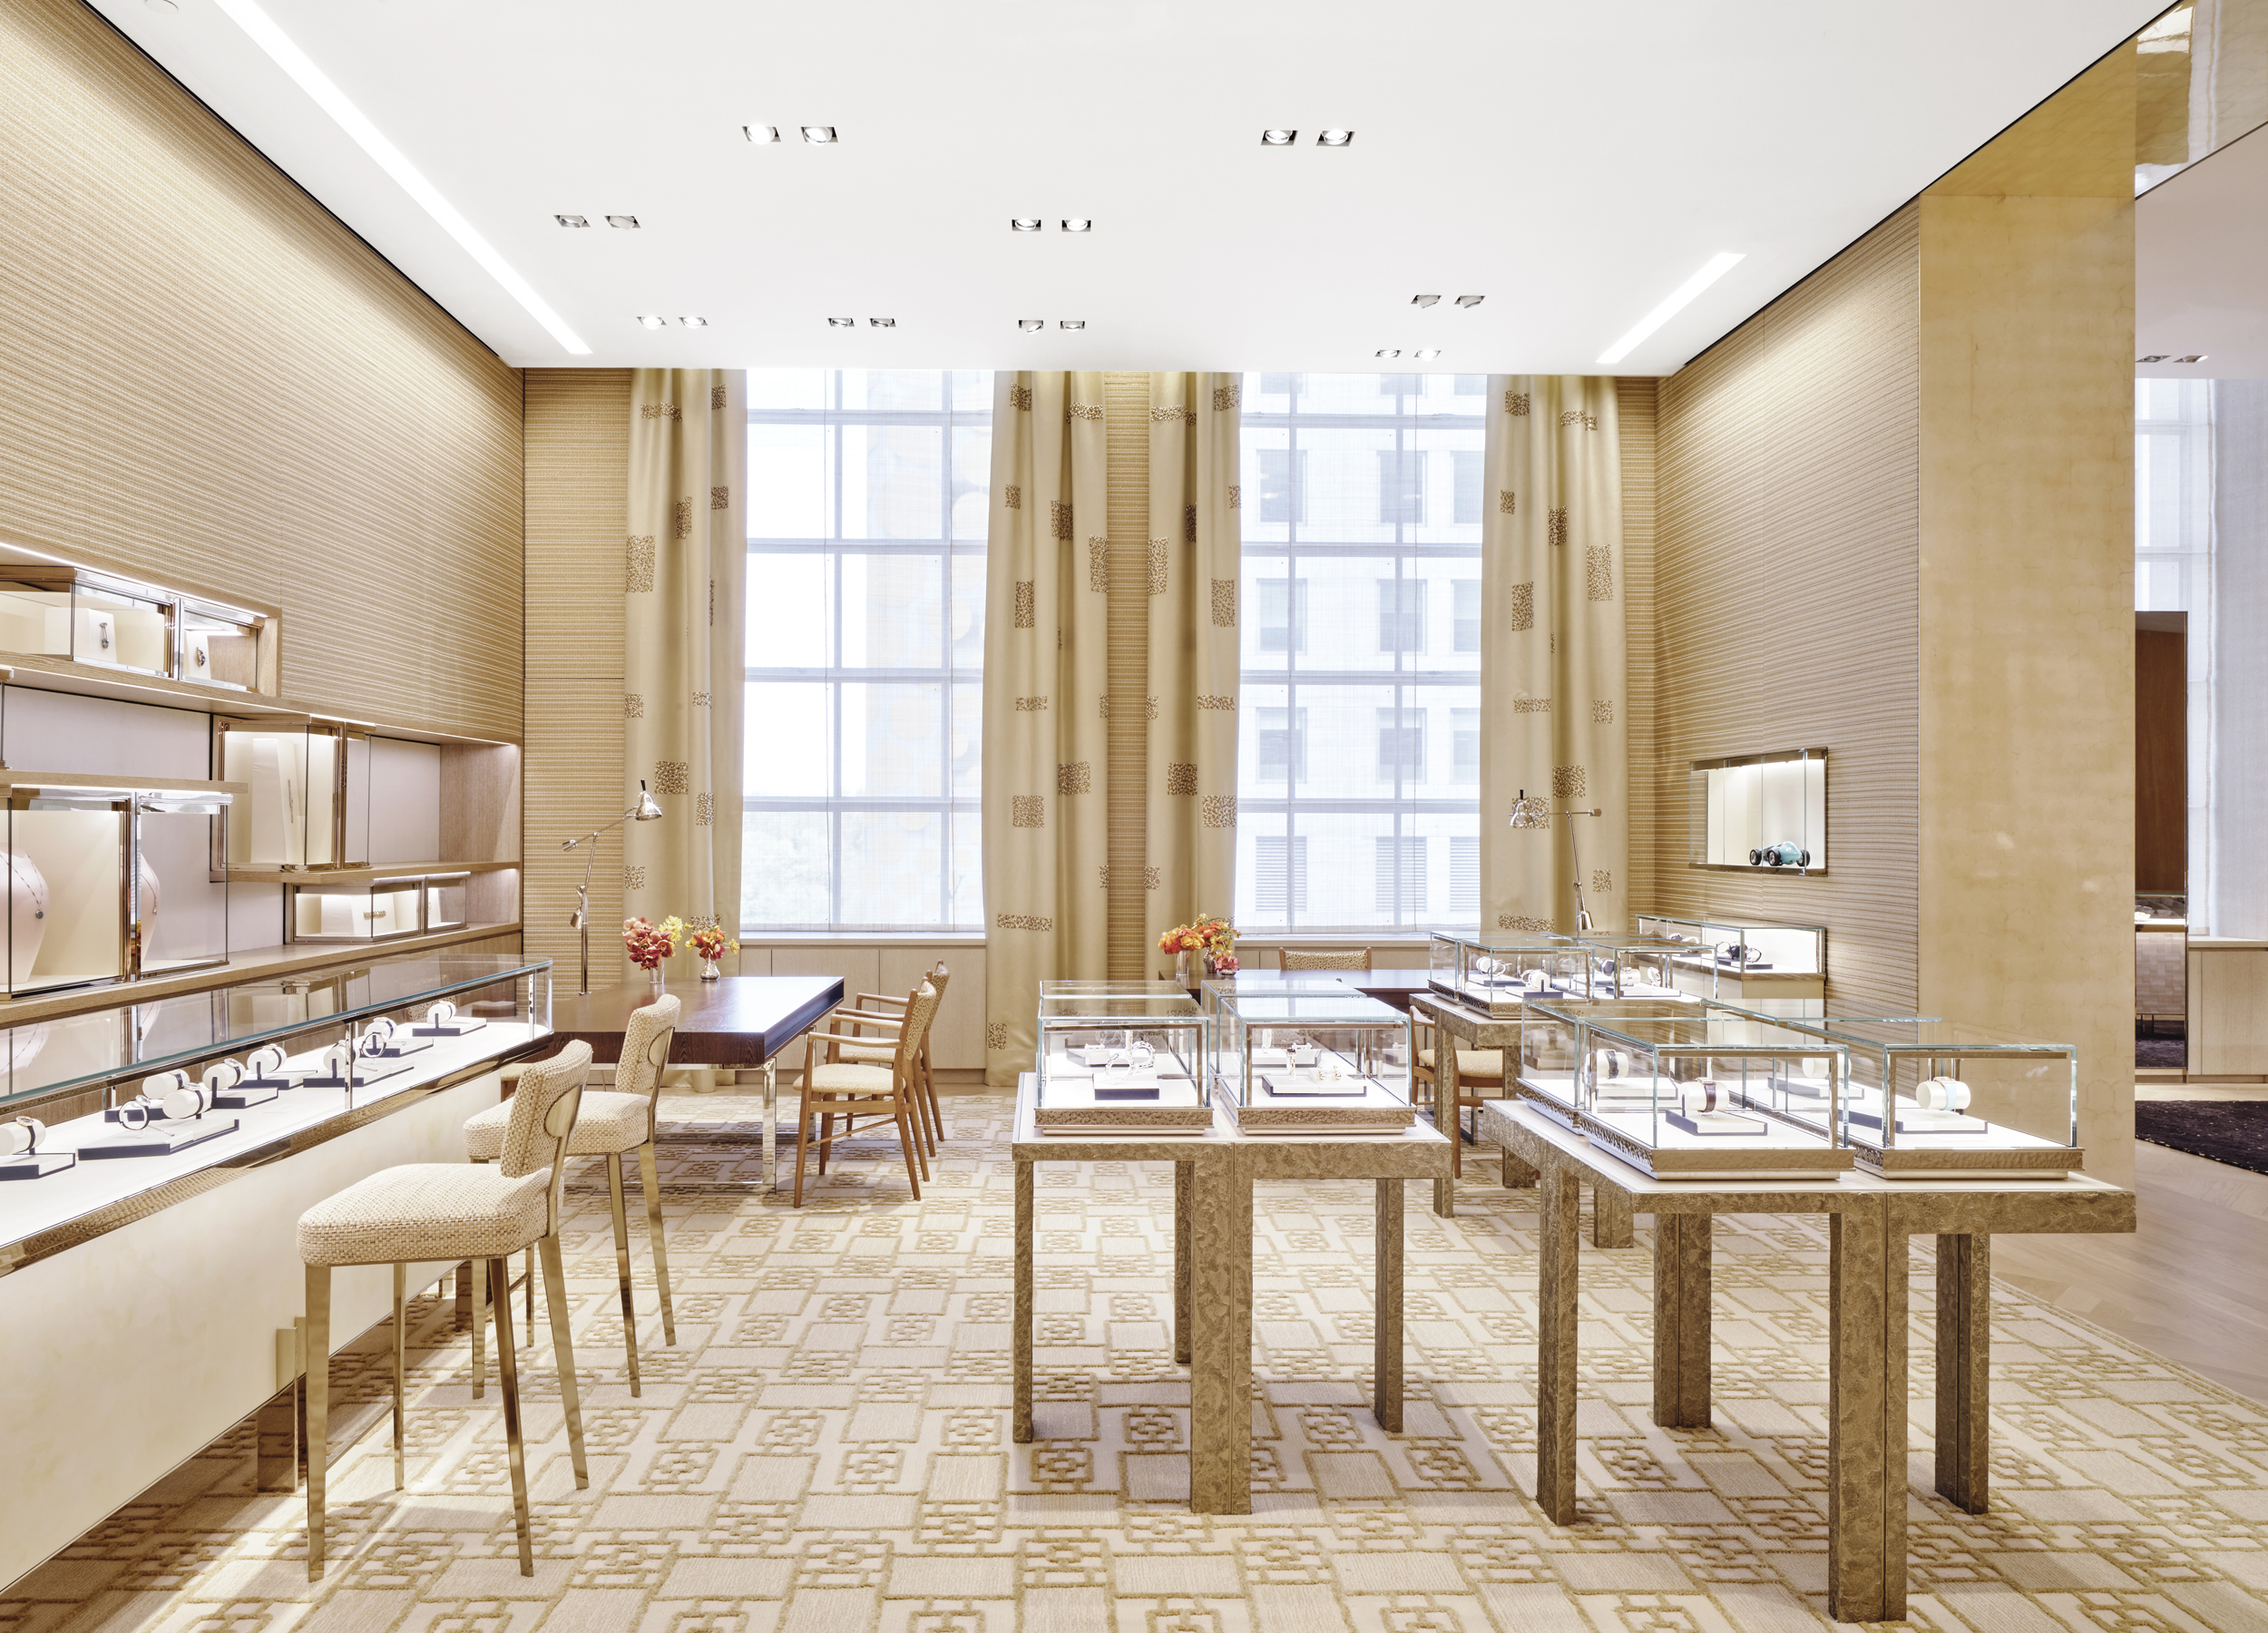 Louis Vuitton Coffee Table Books, Tiffany